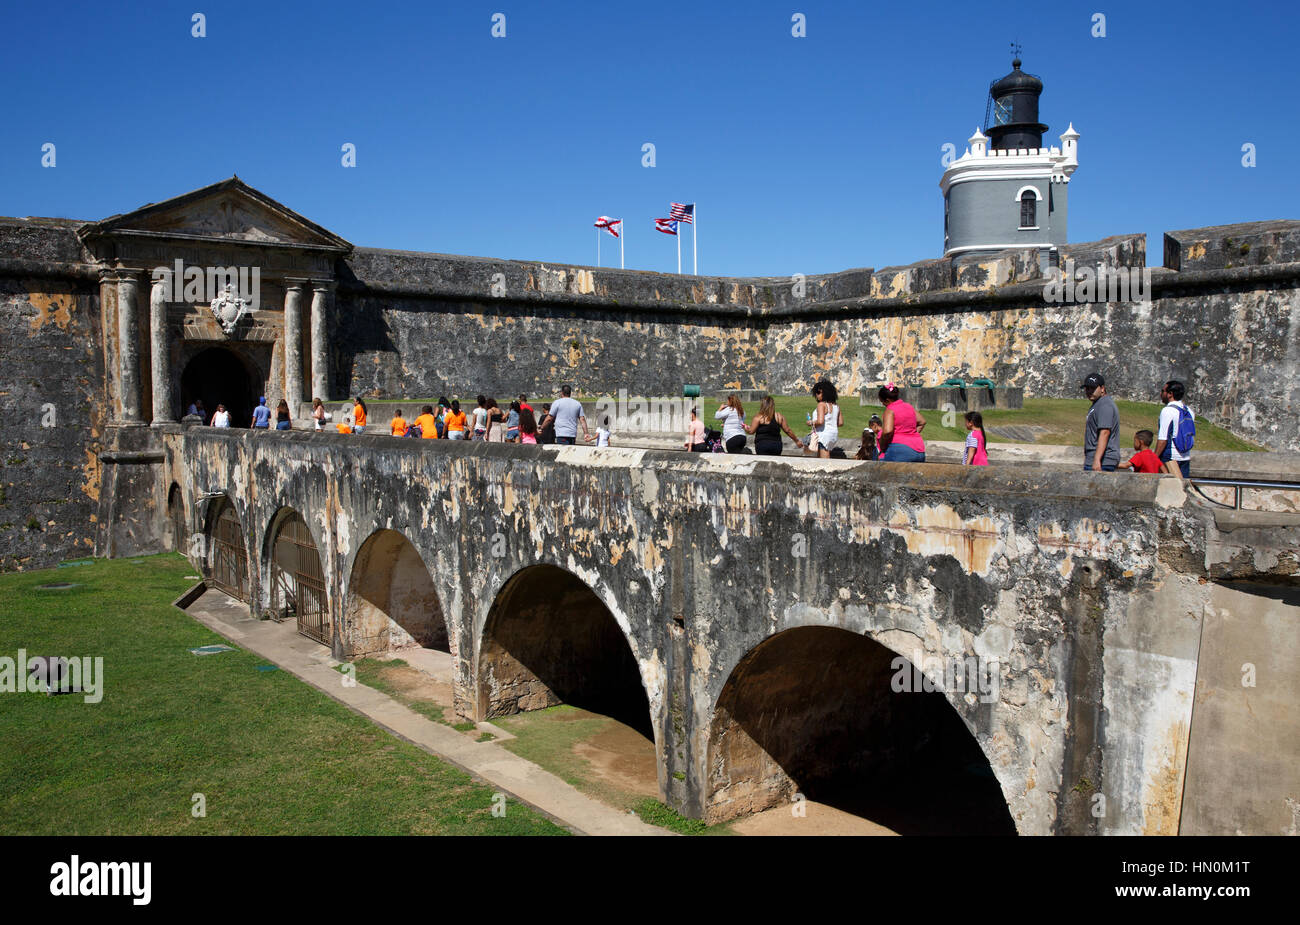 People cross a bridge to the entrance of historic San Felipe del Morro Fortress in San Juan, Puerto Rico Stock Photo